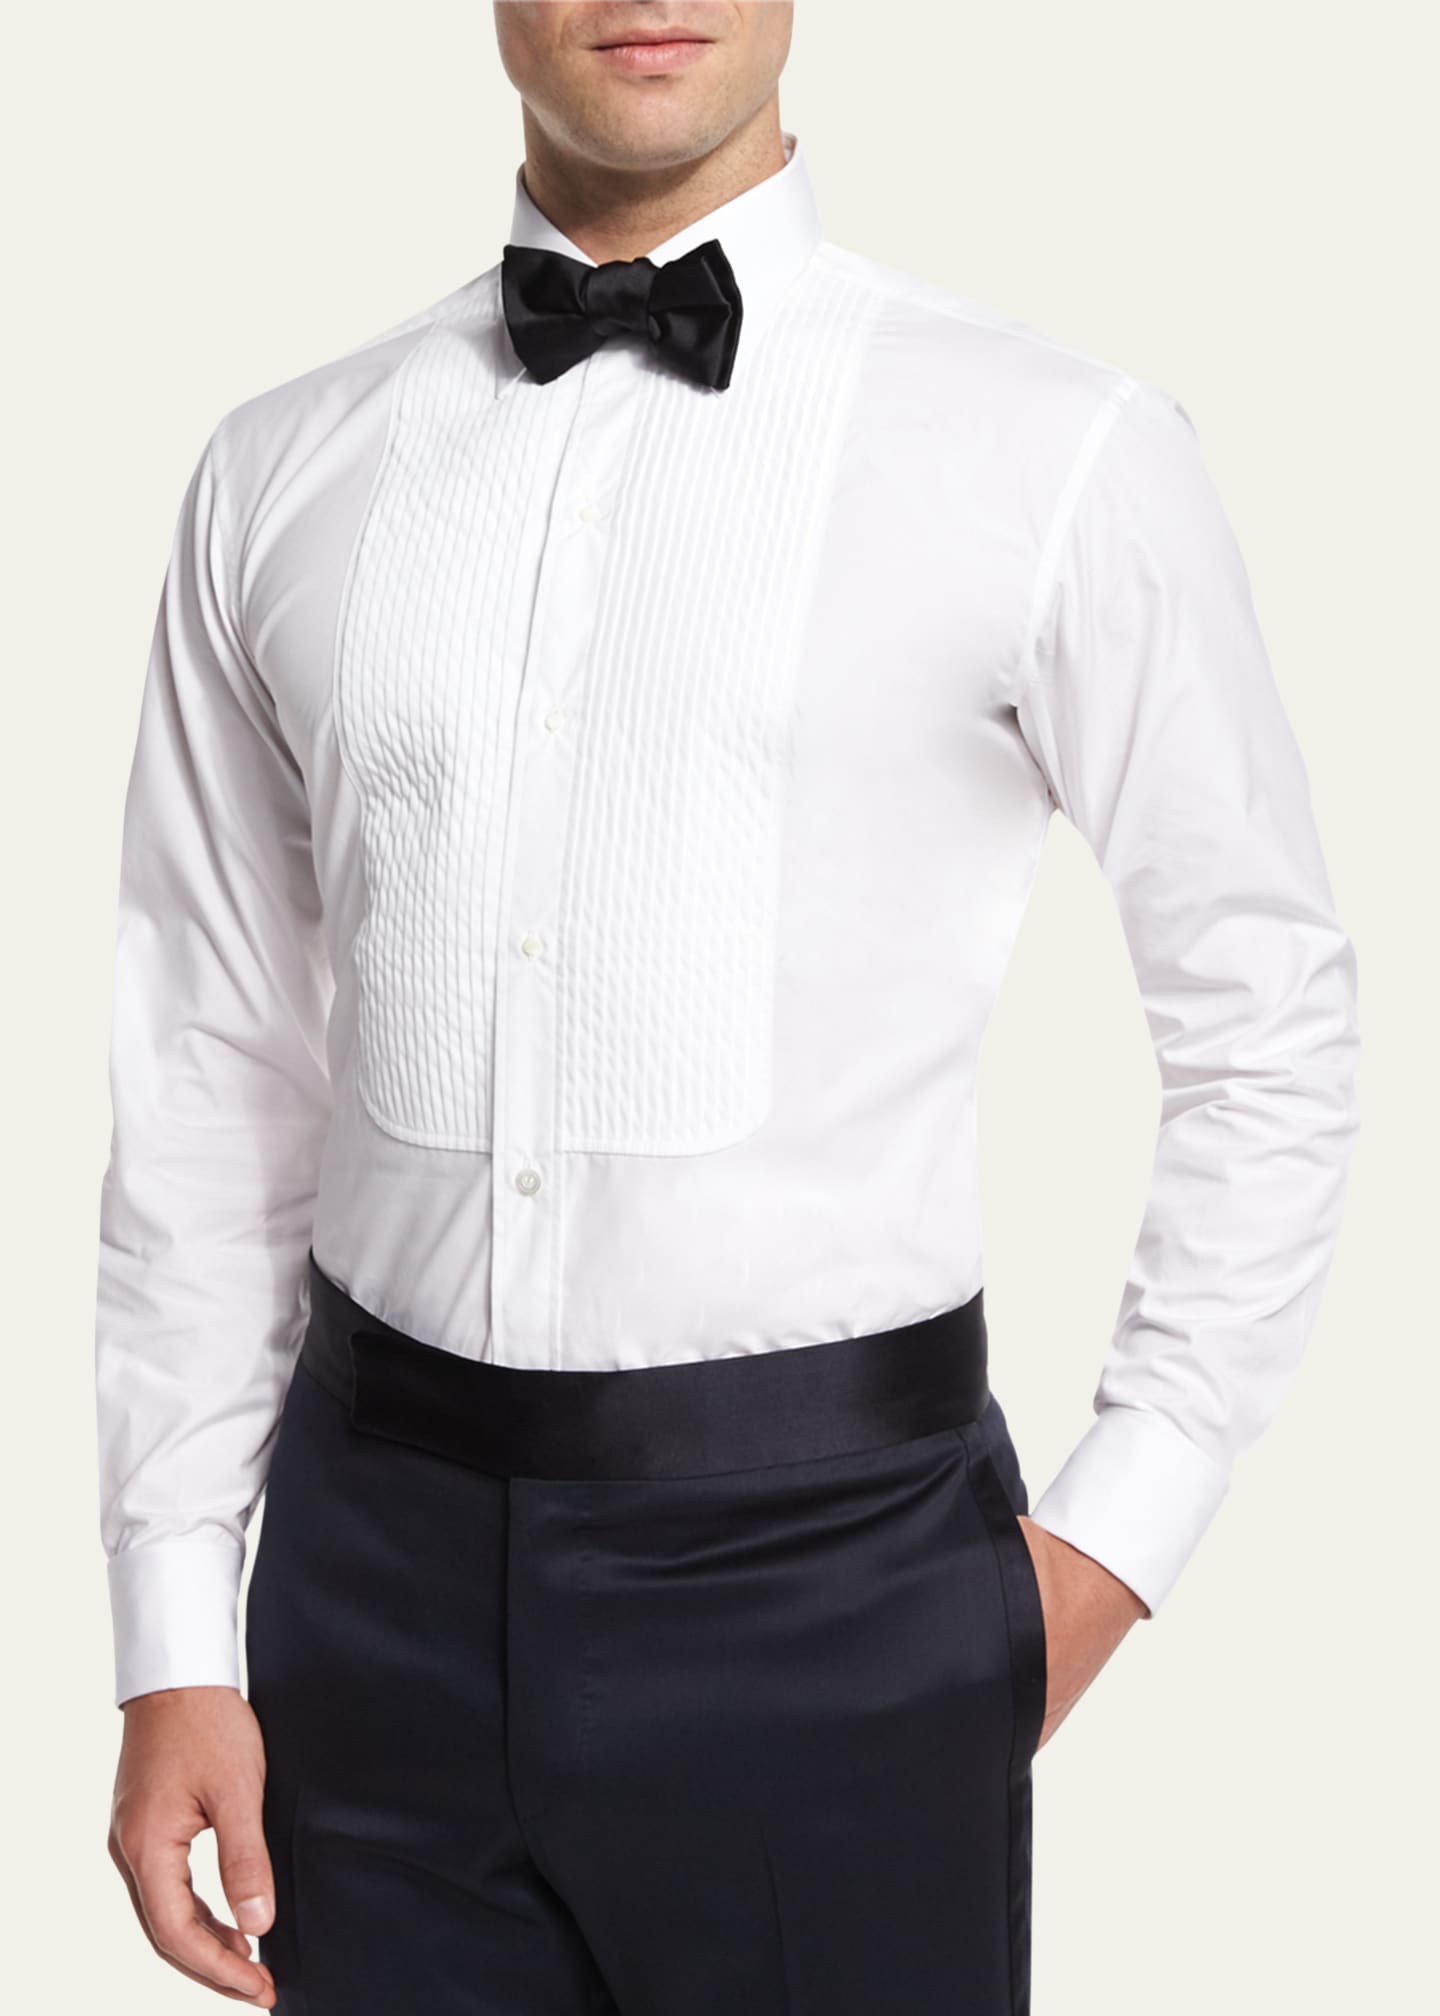 Charvet Men's Formal Shirt with Pleated Bib - Bergdorf Goodman